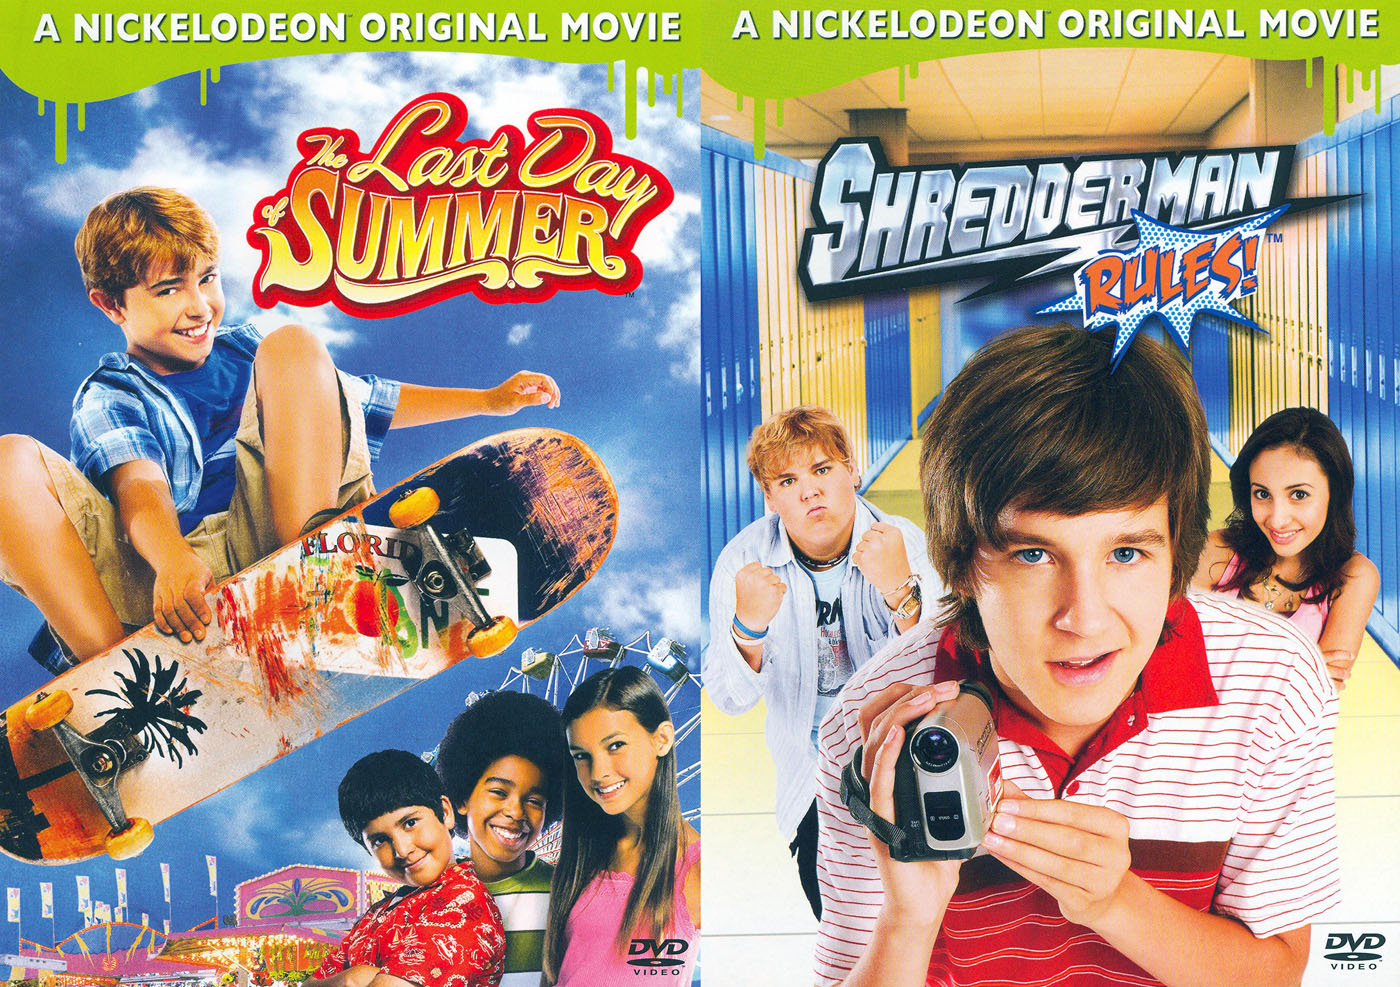 Shredderman Rules! (DVD) Nickelodeon